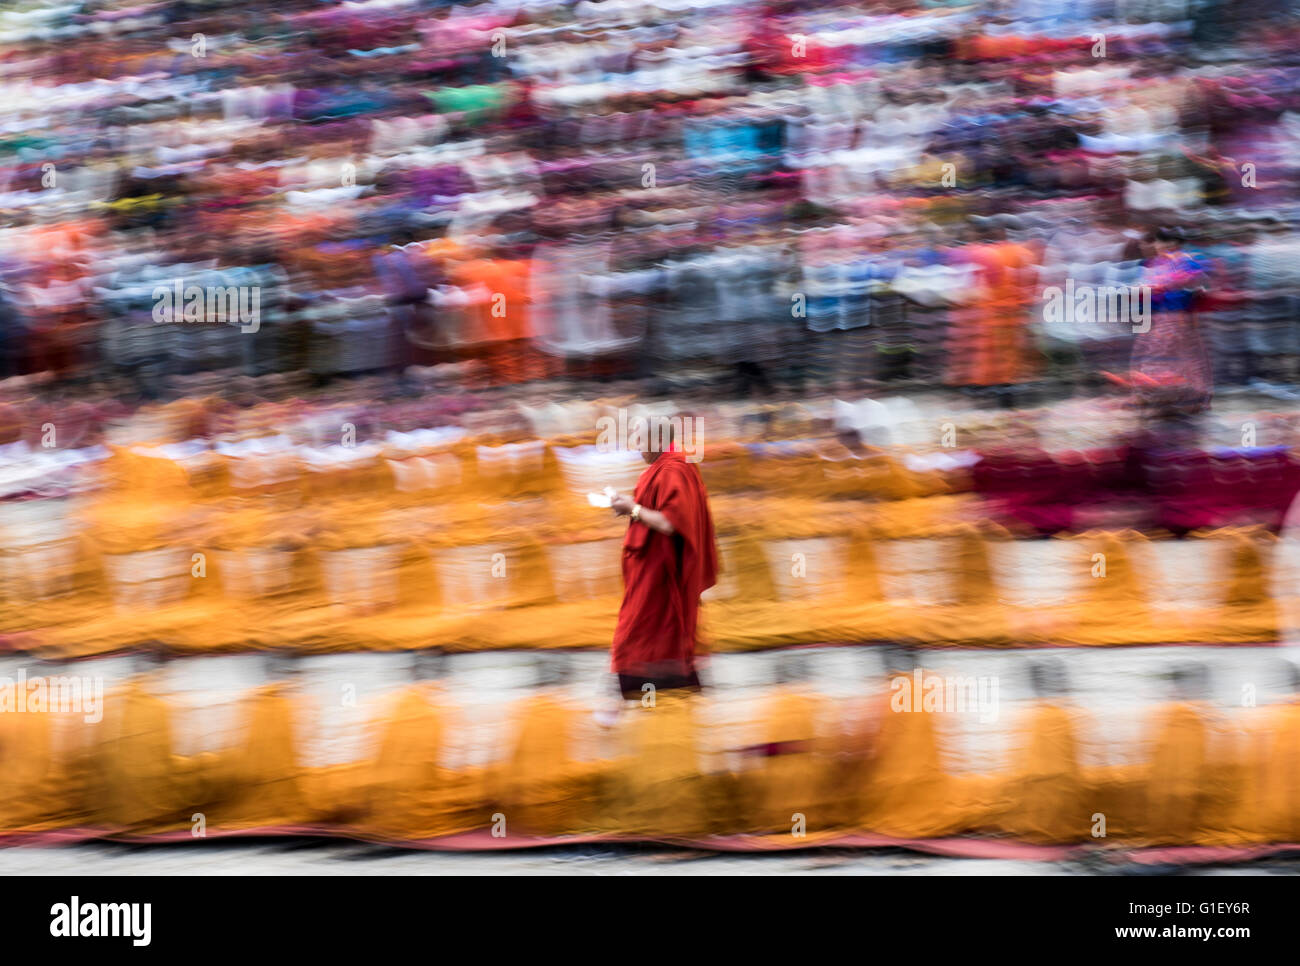 Monje budista llevando ofrendas durante la ceremonia en Paro festival religioso Bhután Foto de stock